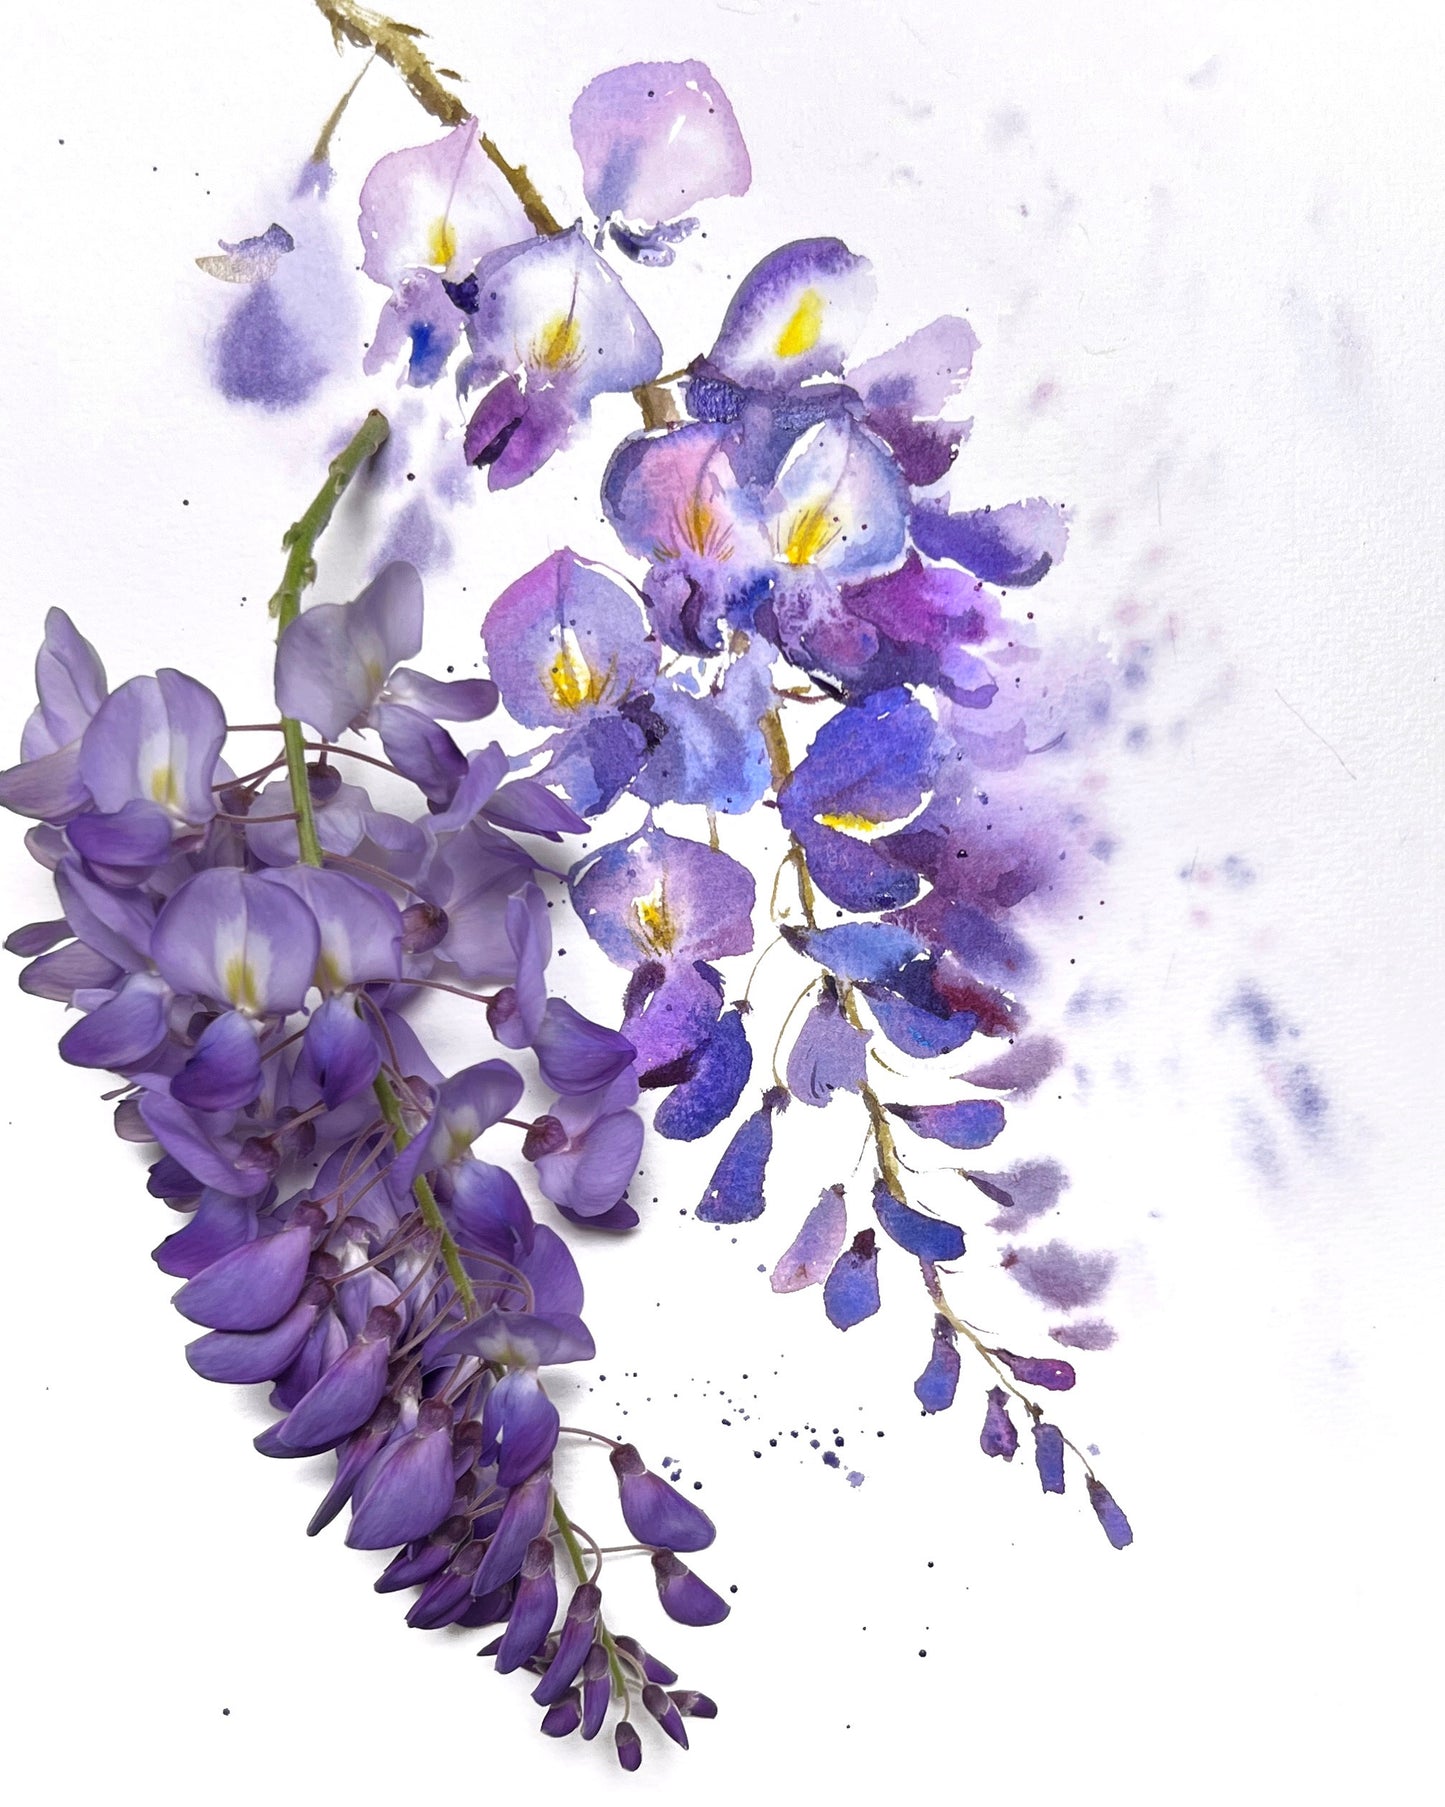 Watercolor Wisteria Painting, Flower Original Wall Art, Purple flowers, Still Life, Gift For Mom Ideas, Flora Artwork